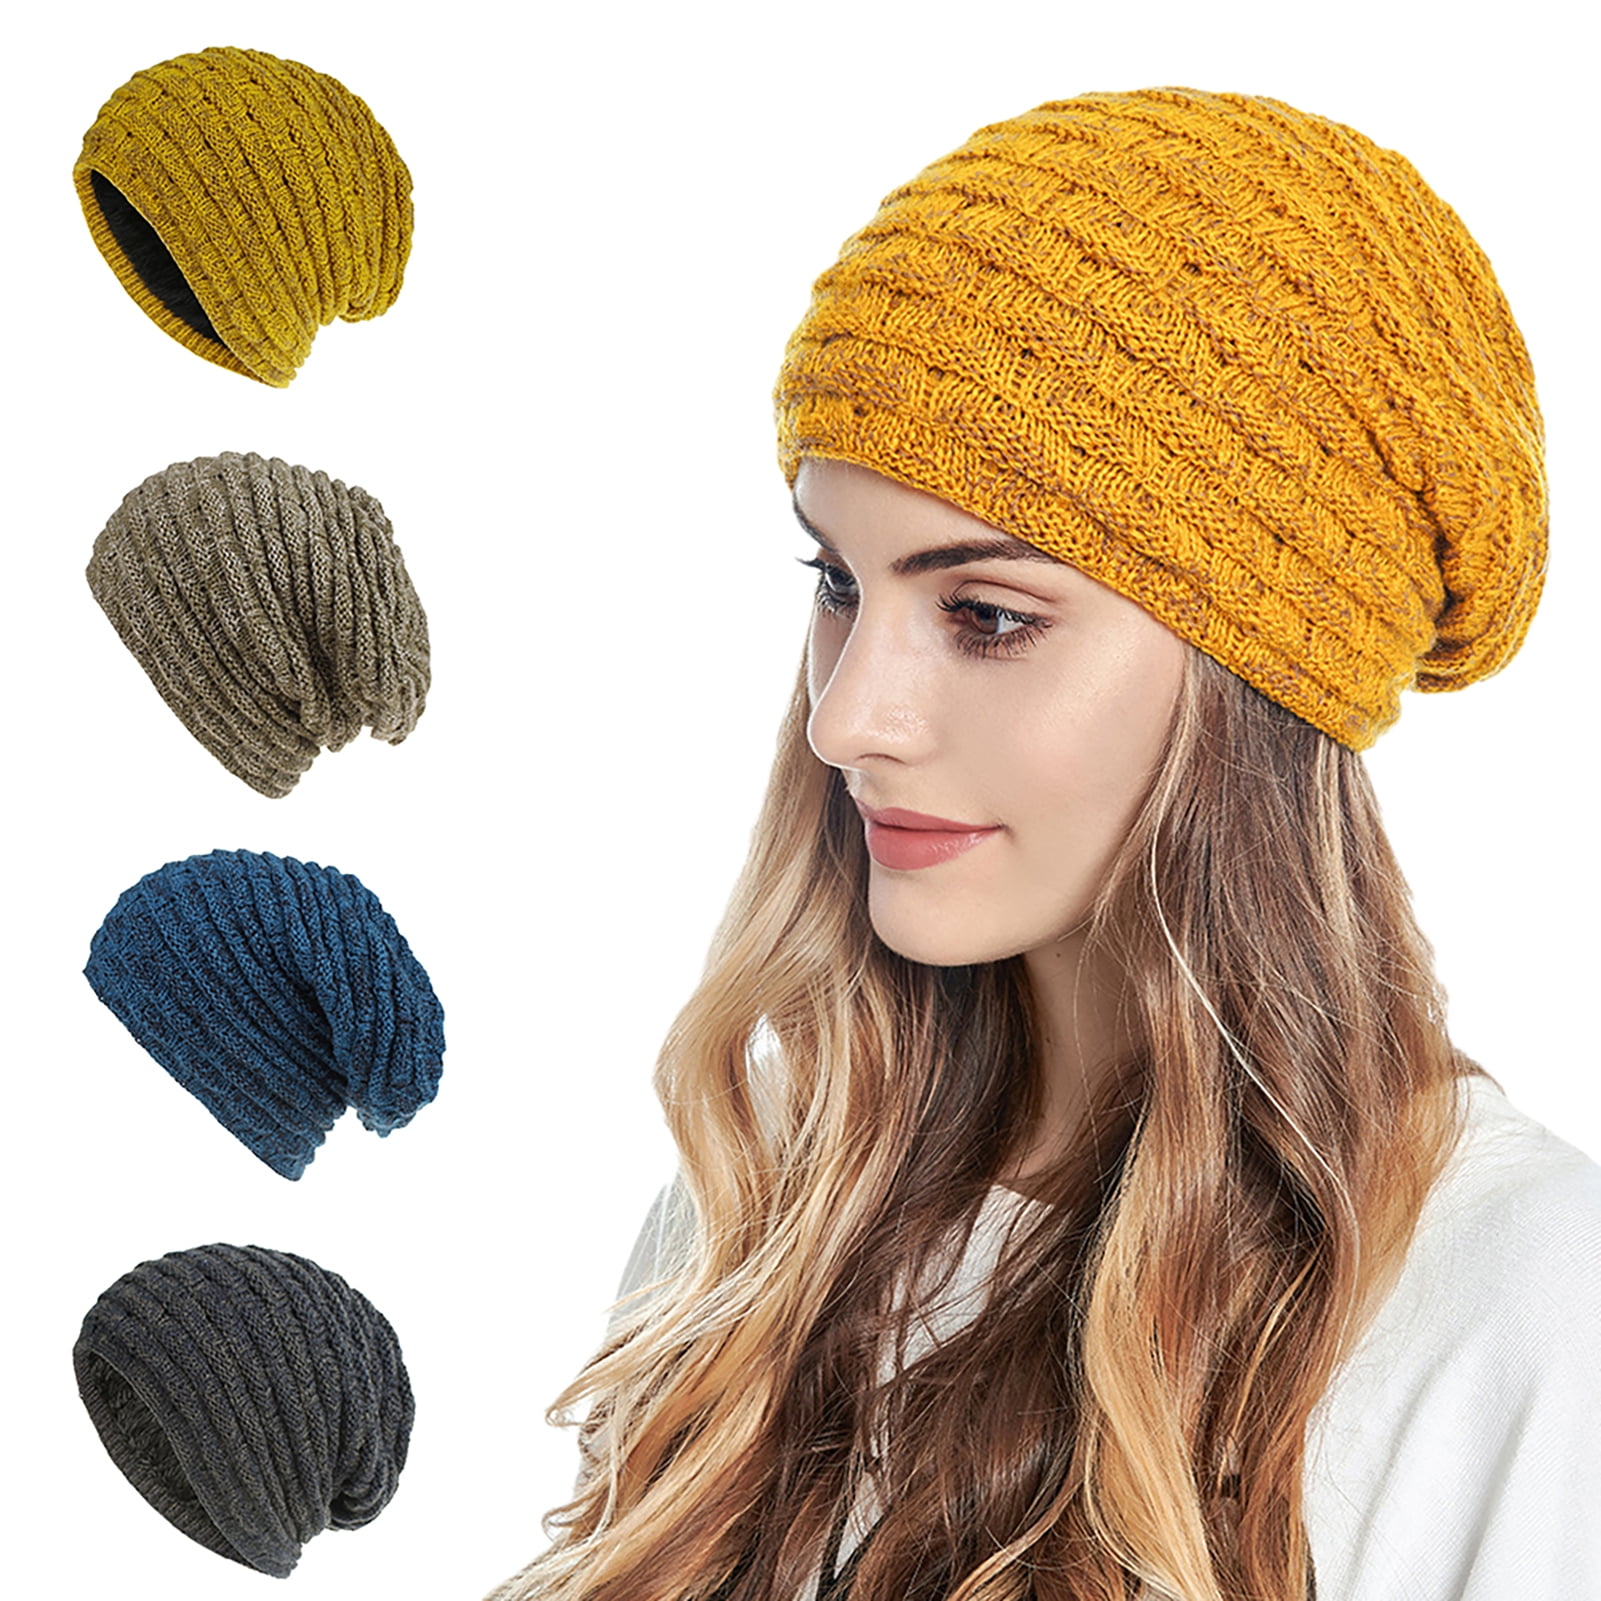 Horizon-t Plaid Unisex 100% Acrylic Knitting Hat Cap Fashion Beanie Hat